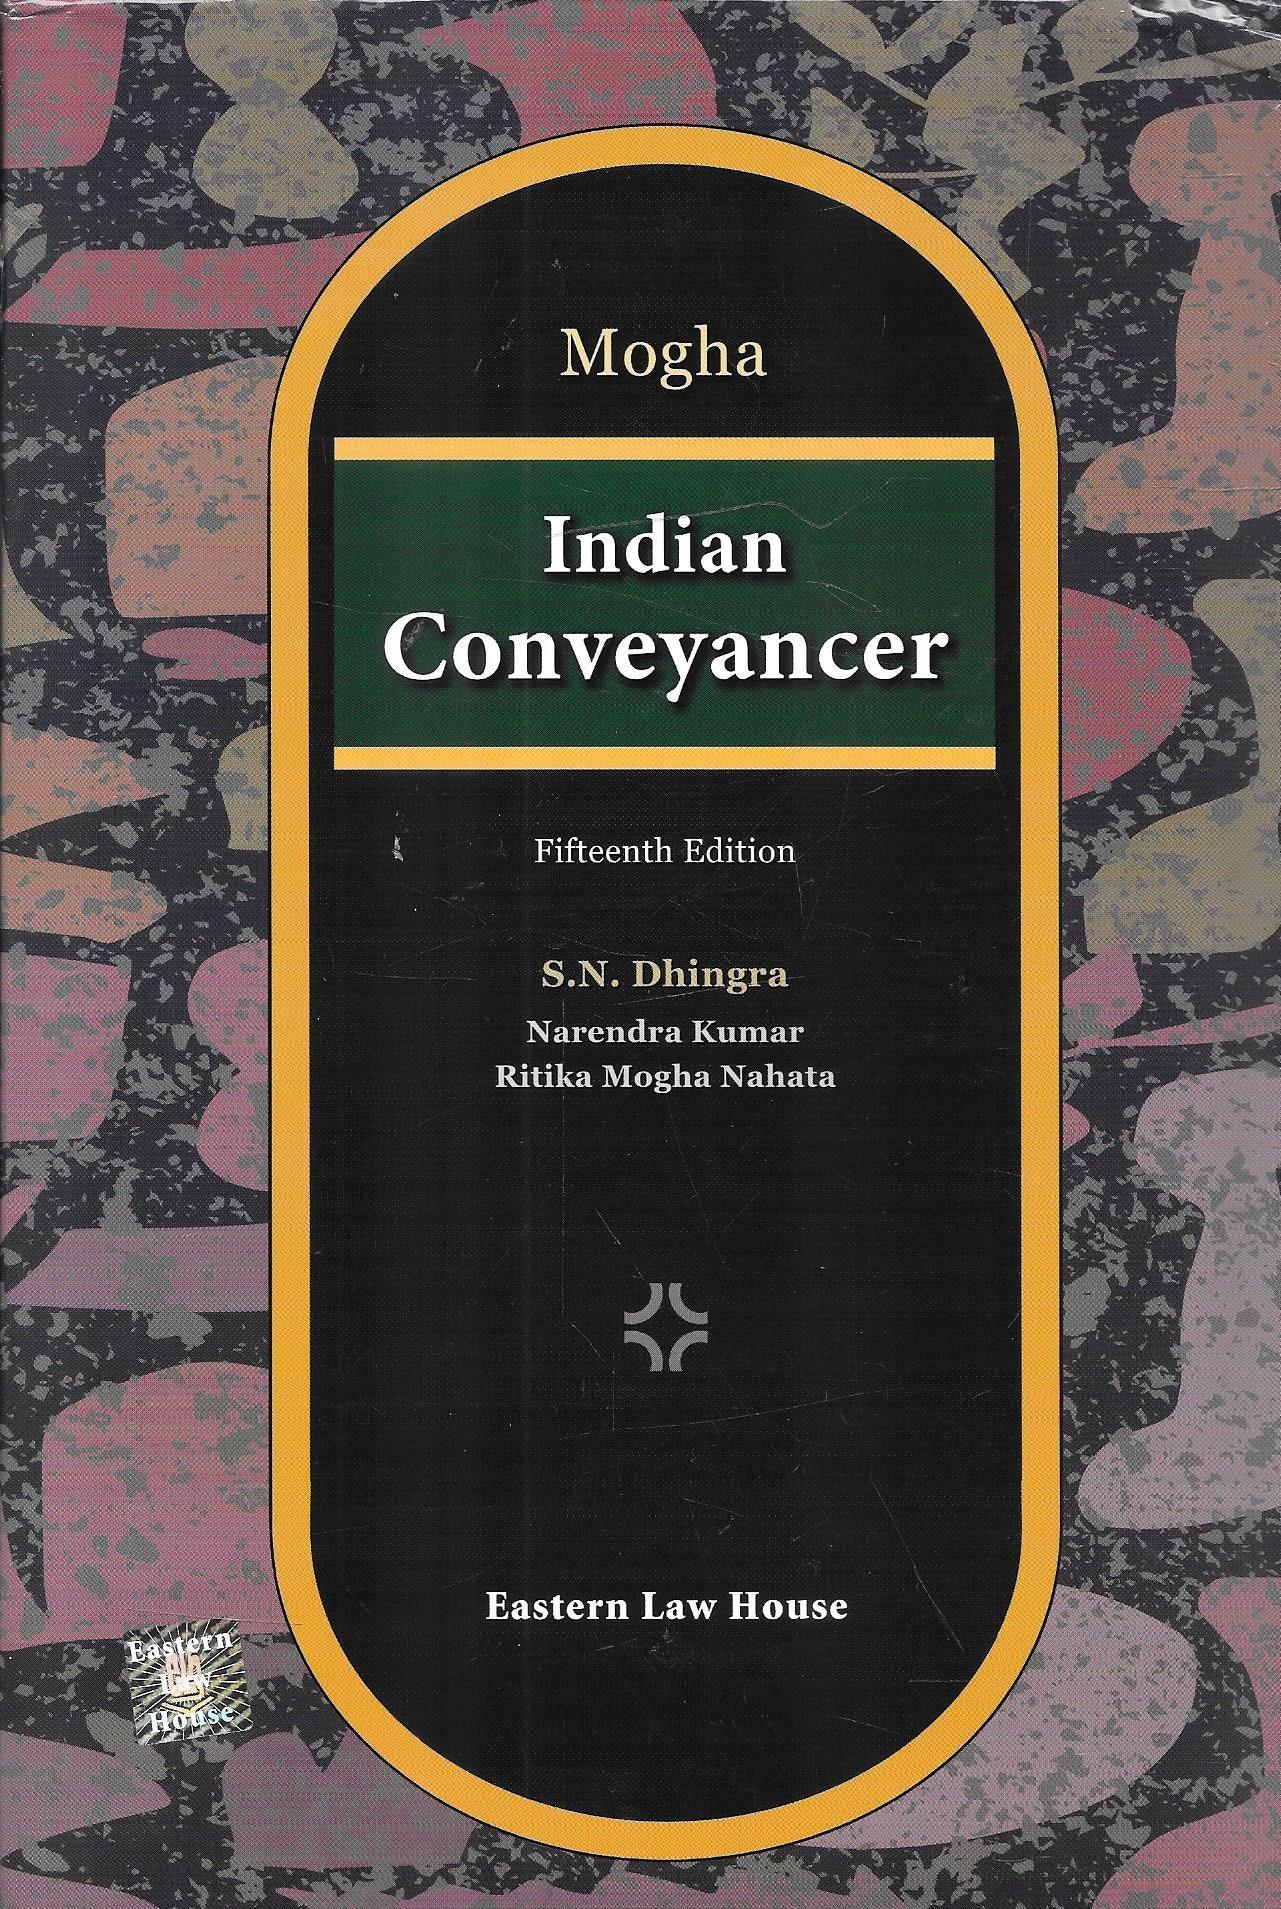 Mogha's Indian Conveyancer